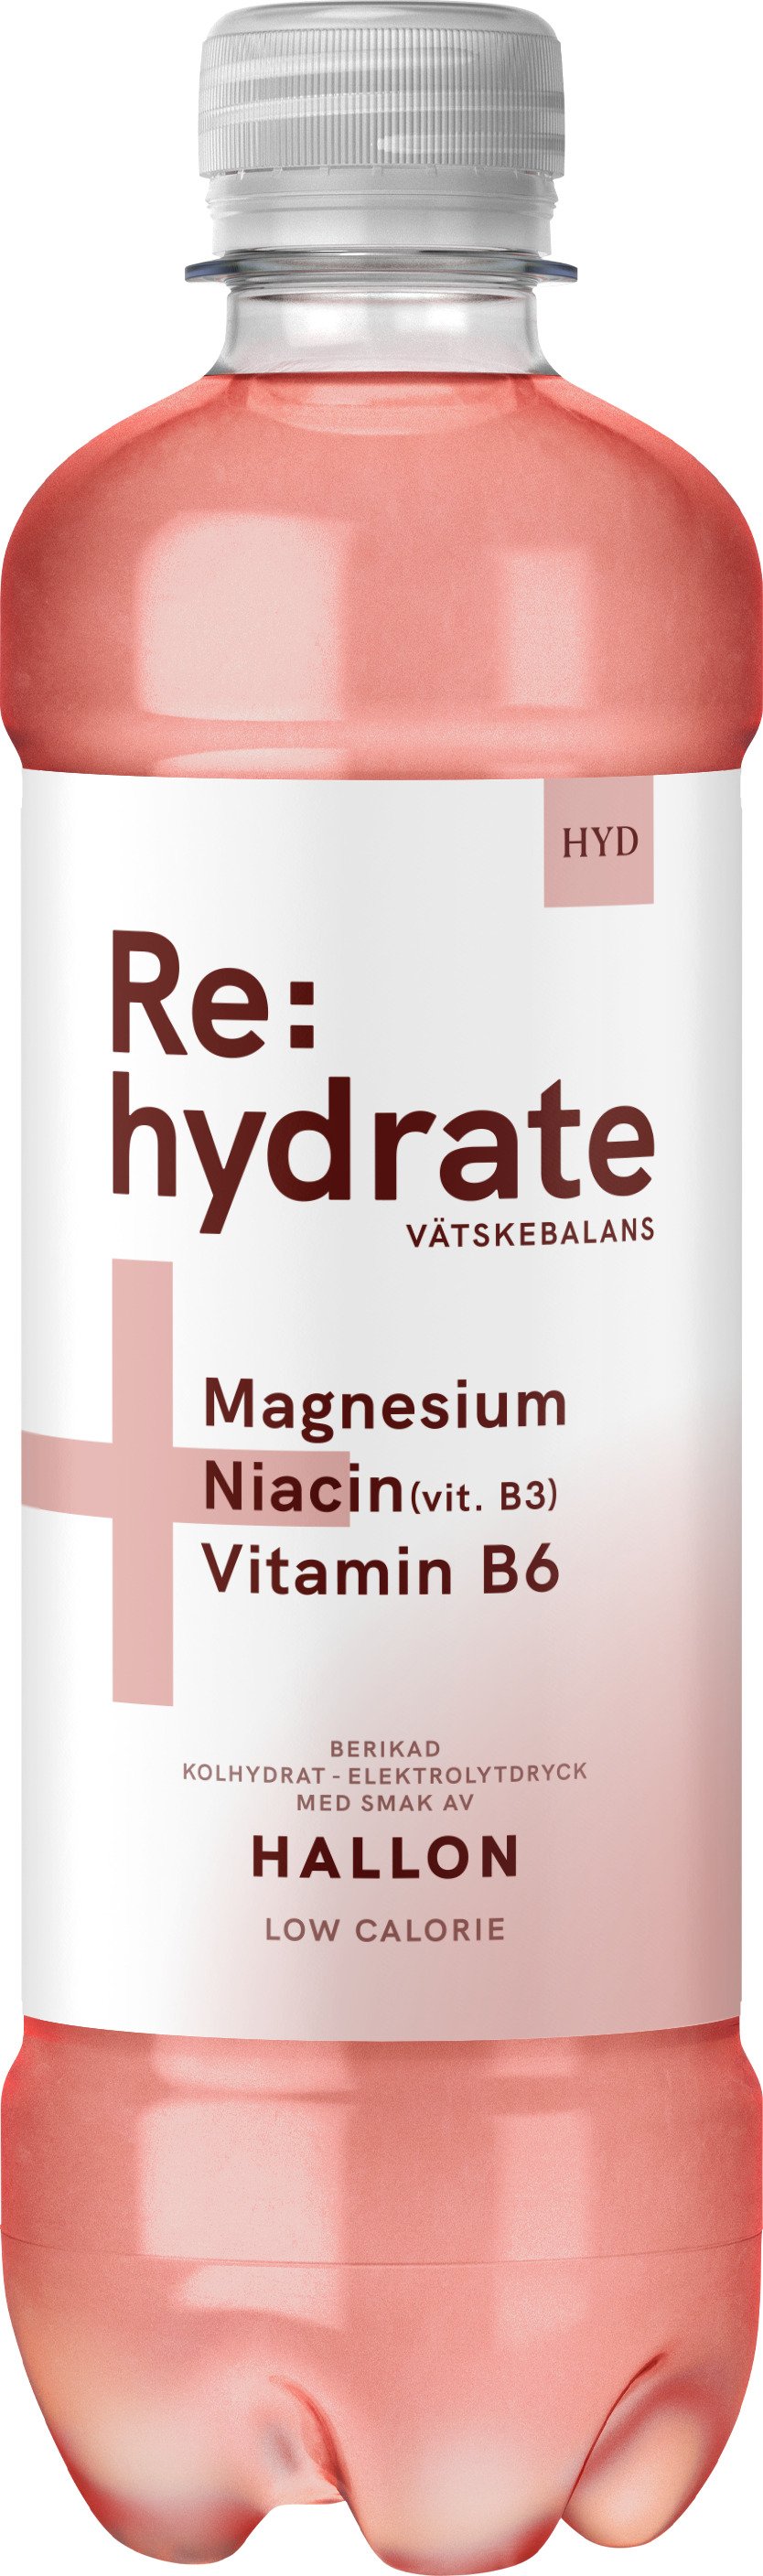 HYD Re:hydrate Vätskebalans Hallon 500 ml